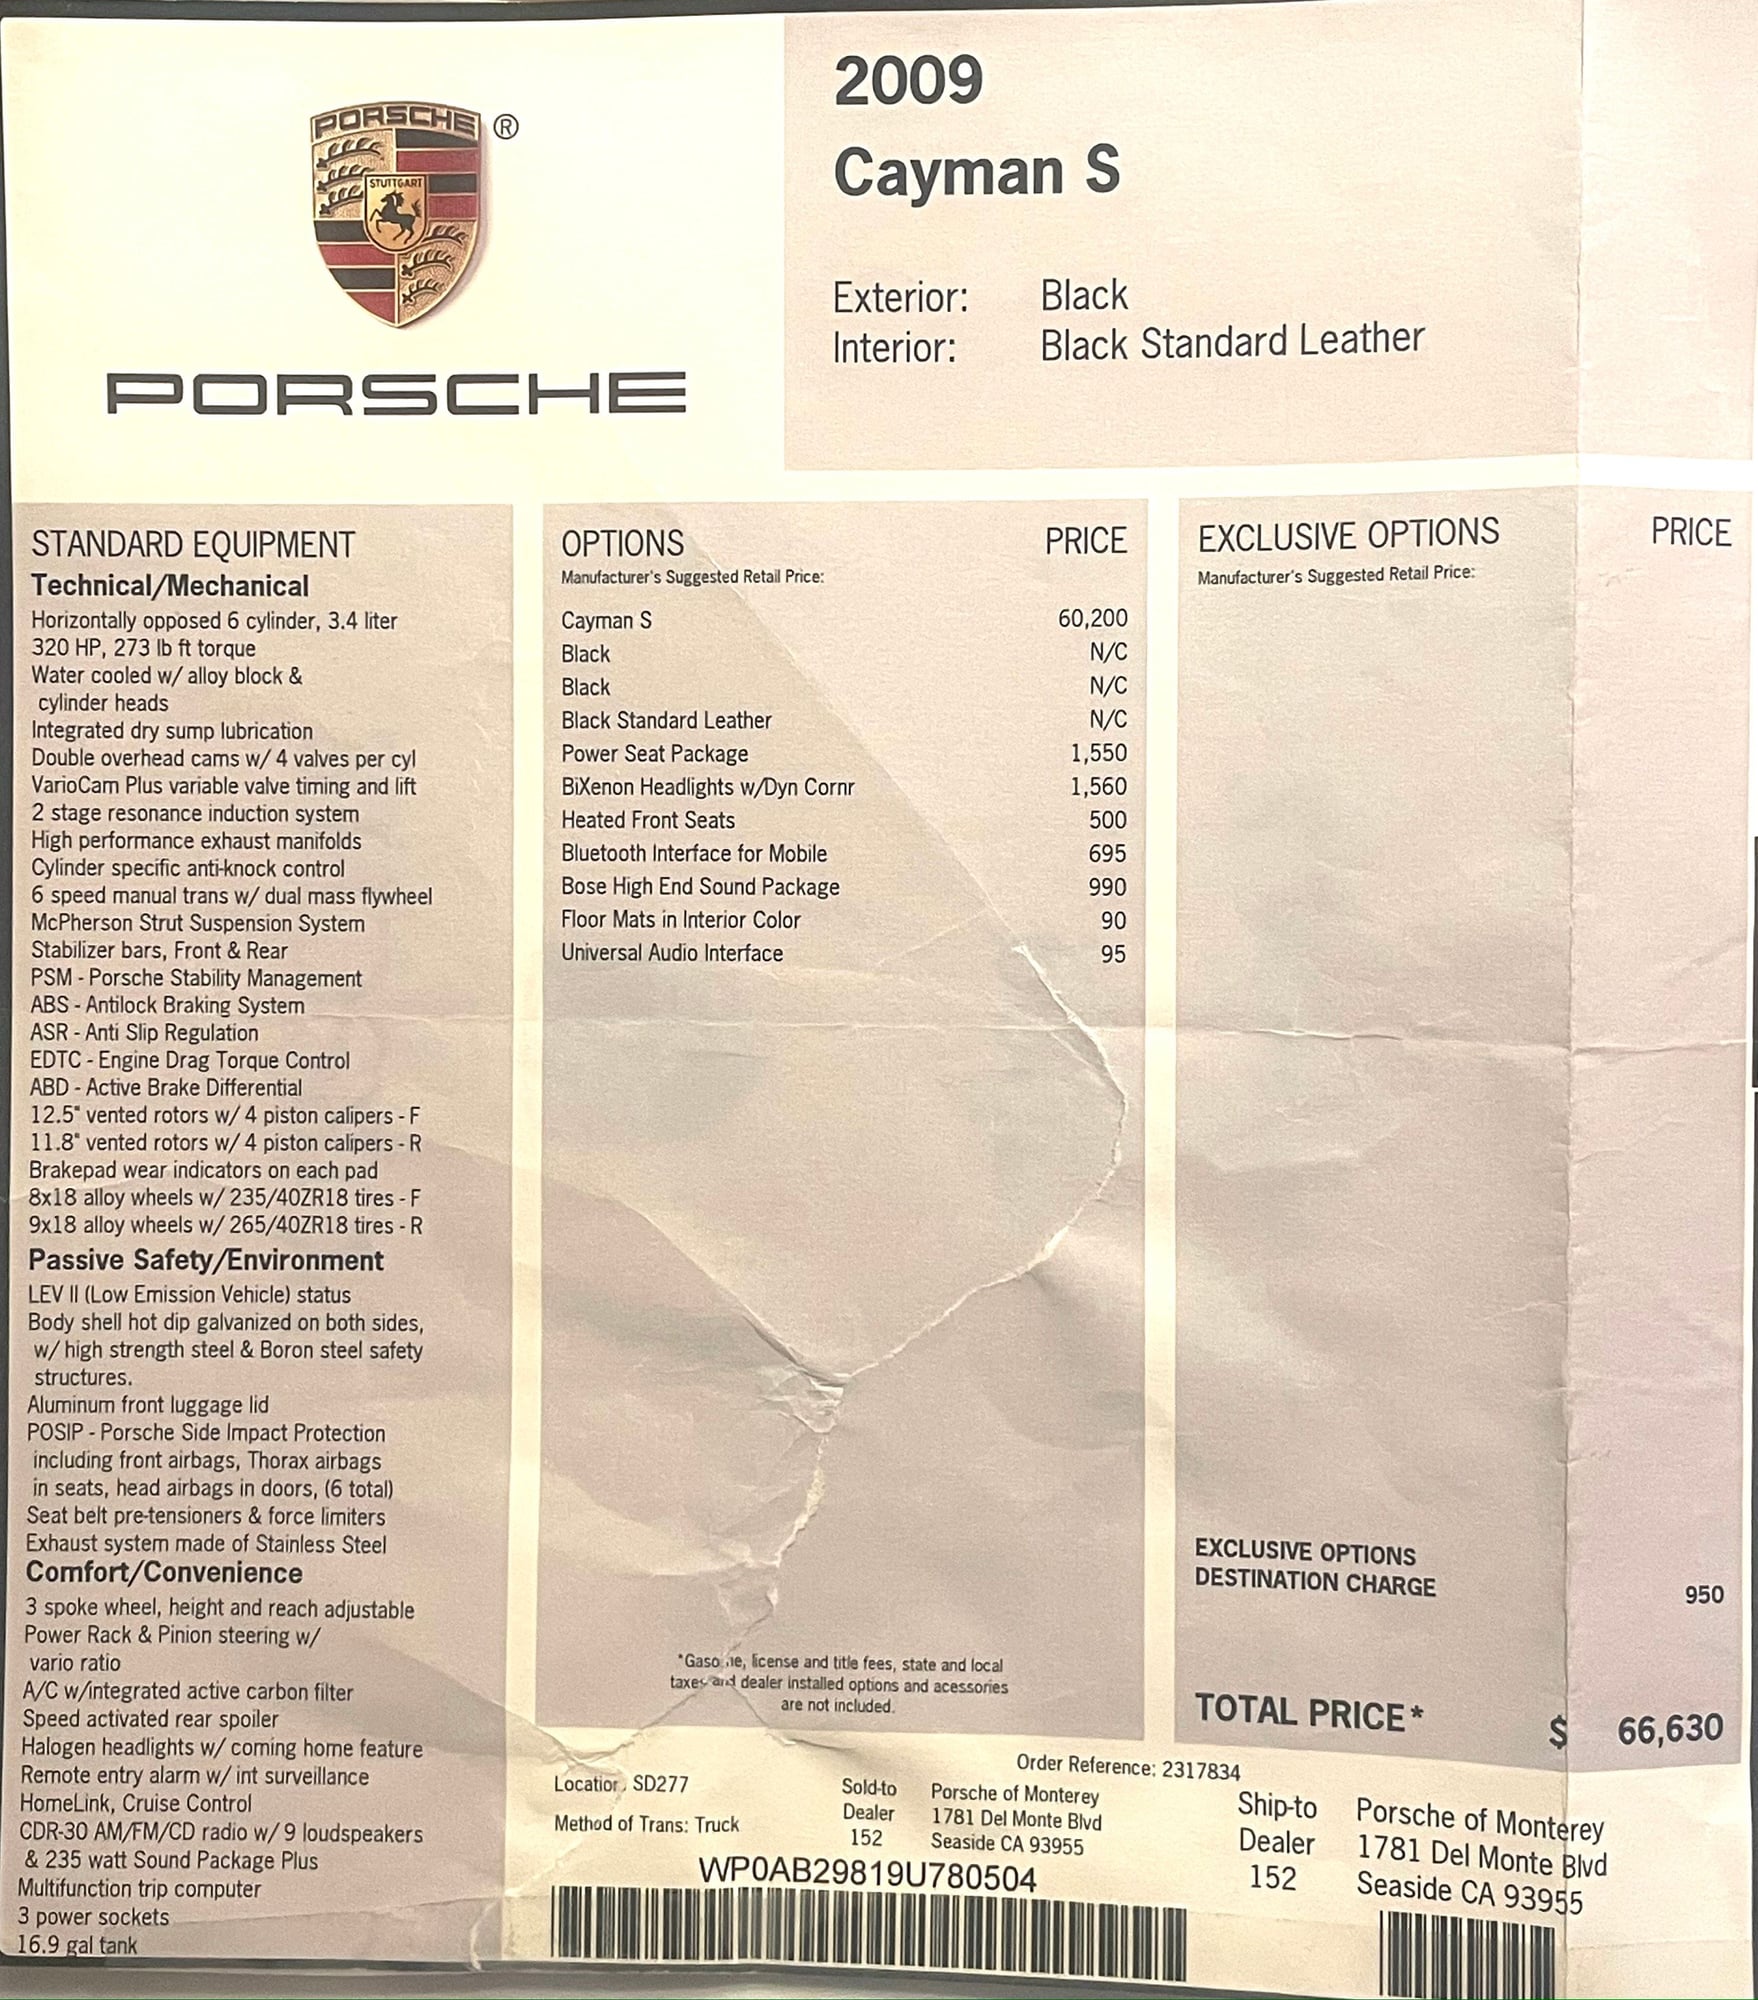 2009 Porsche Cayman - 2009 Porsche 987.2 CAYMAN S MANUAL, CA car - Used - VIN WP0AB29819U780504 - 48,850 Miles - 6 cyl - 2WD - Manual - Coupe - Black - San Francisco, CA 94122, United States